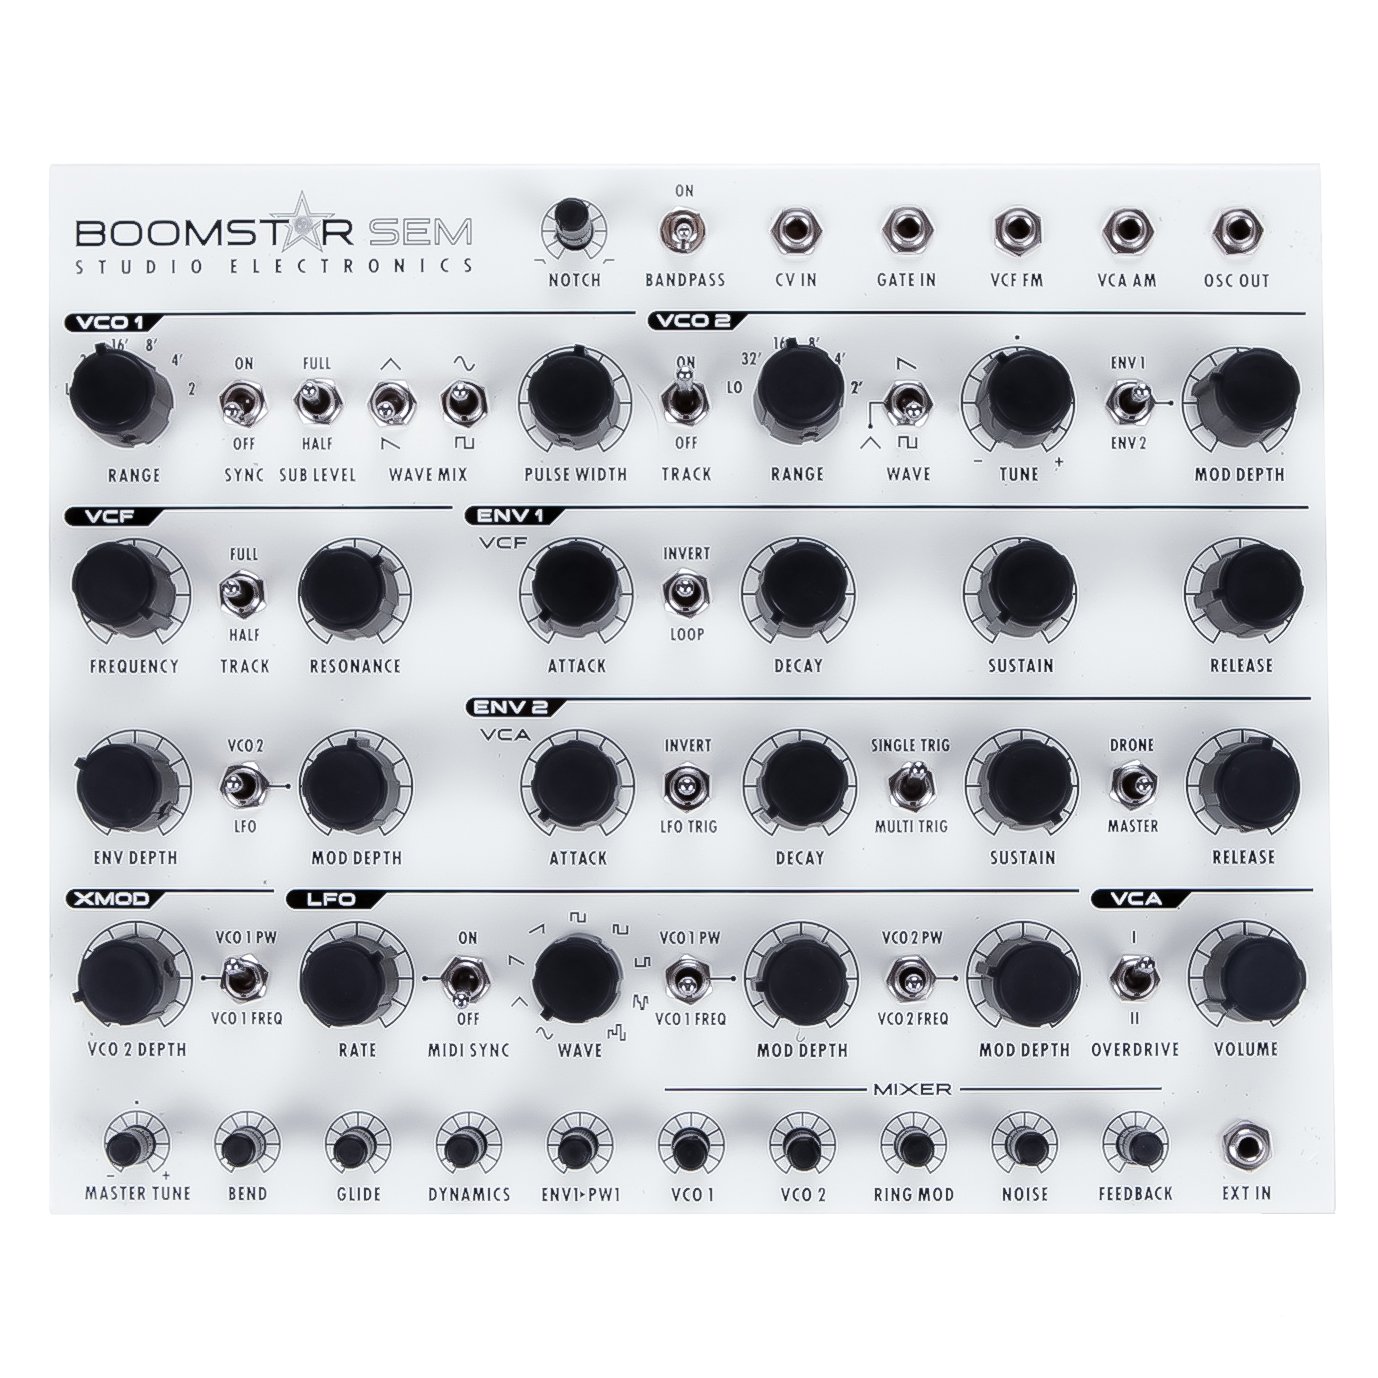   Studio Electronics Boomstar 3003